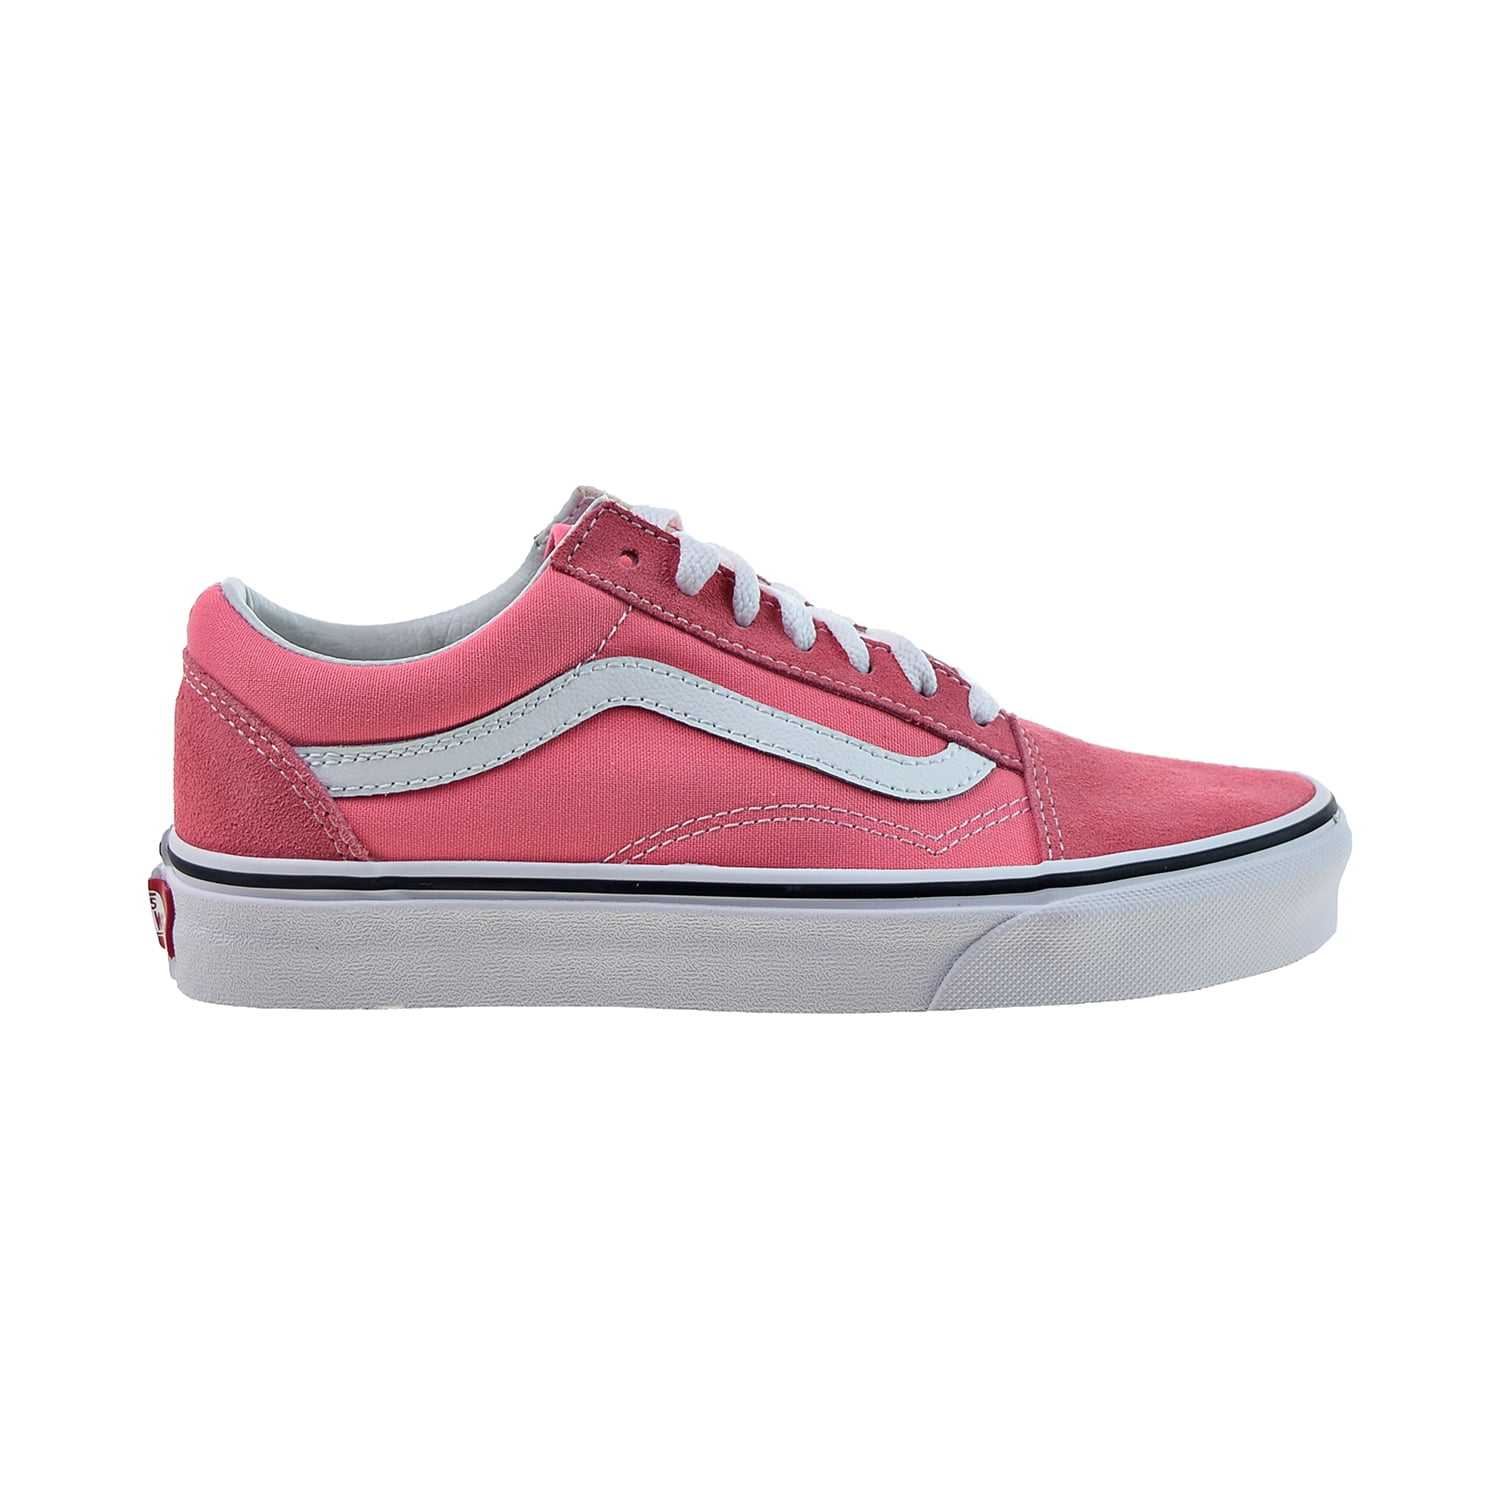 Vans Old Skool Men's Shoes Strawberry Pink-True White Walmart.com